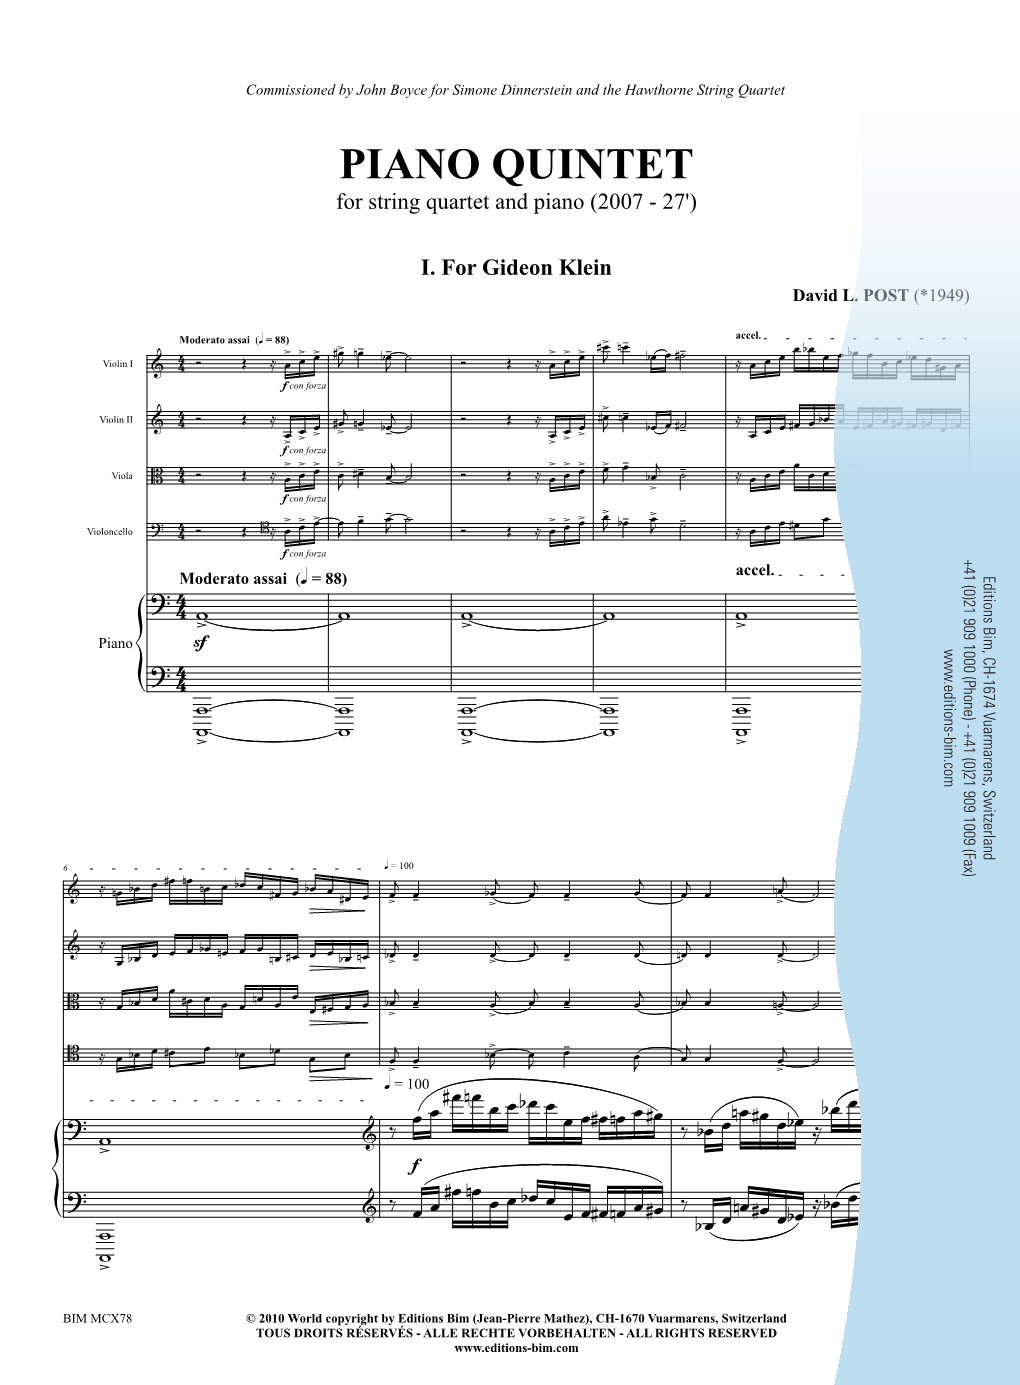 PIANO QUINTET for String Quartet and Piano (2007 - 27')